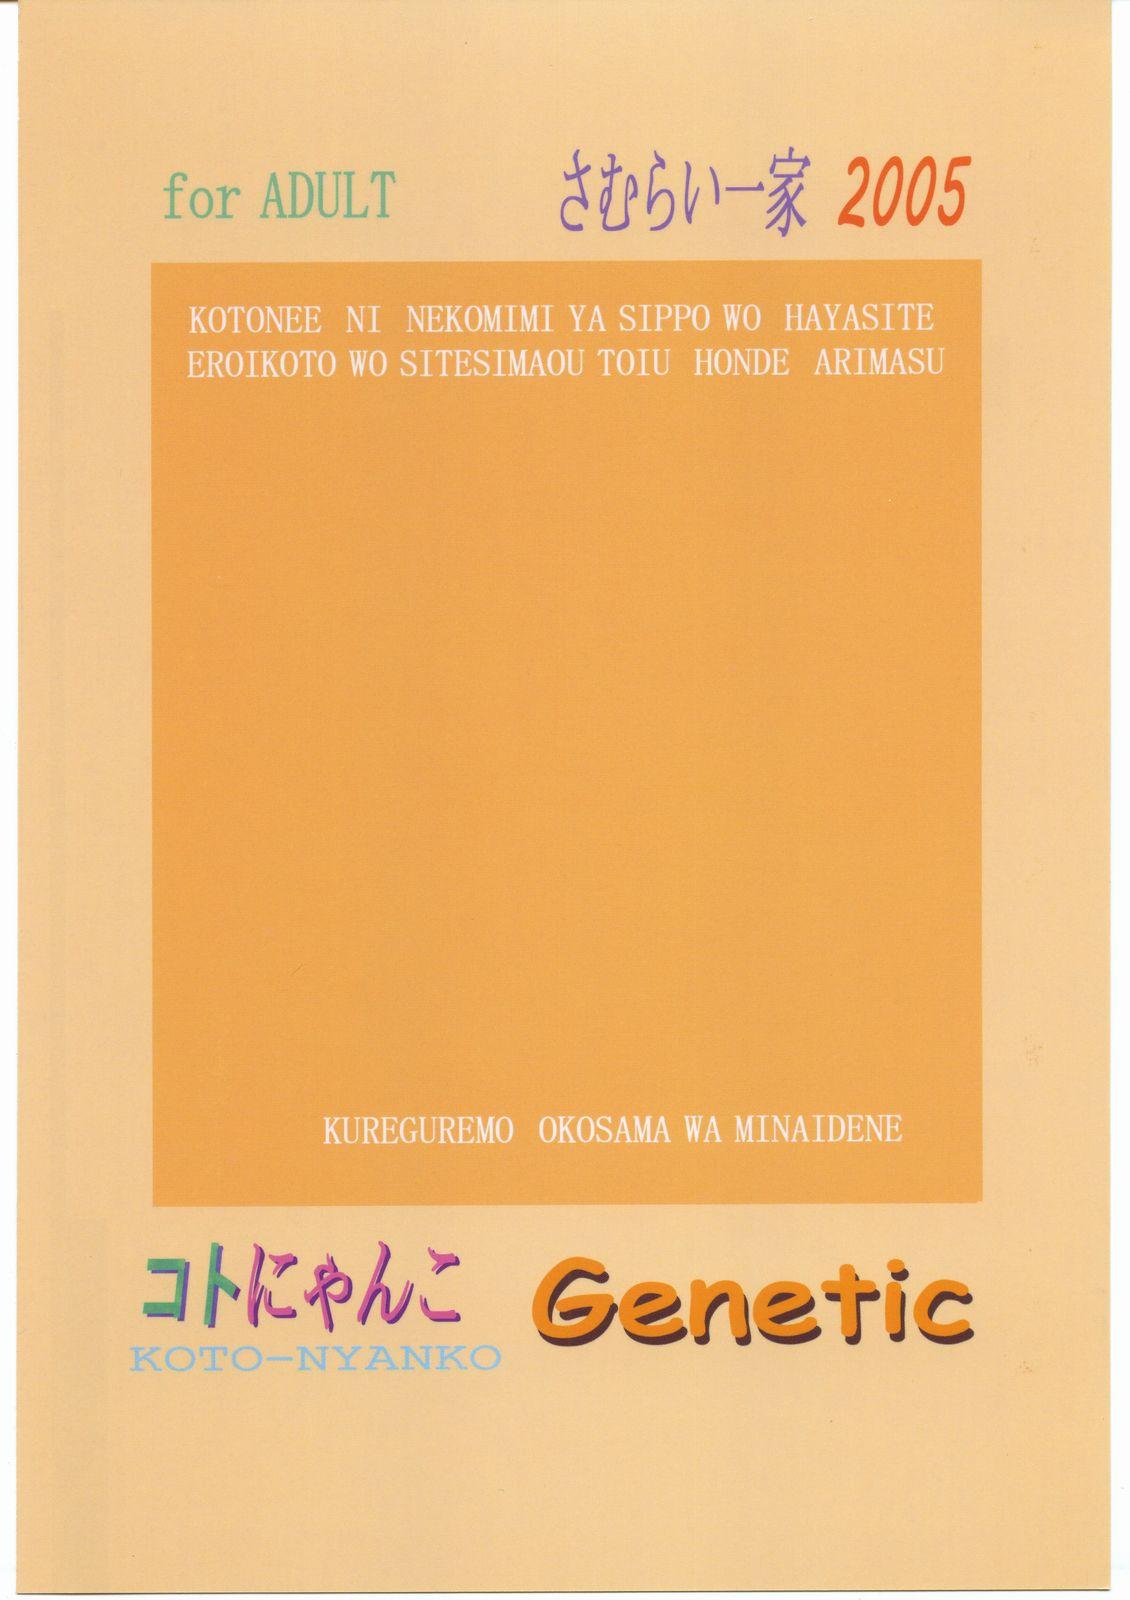 Koto-Nyanko Genetic 25